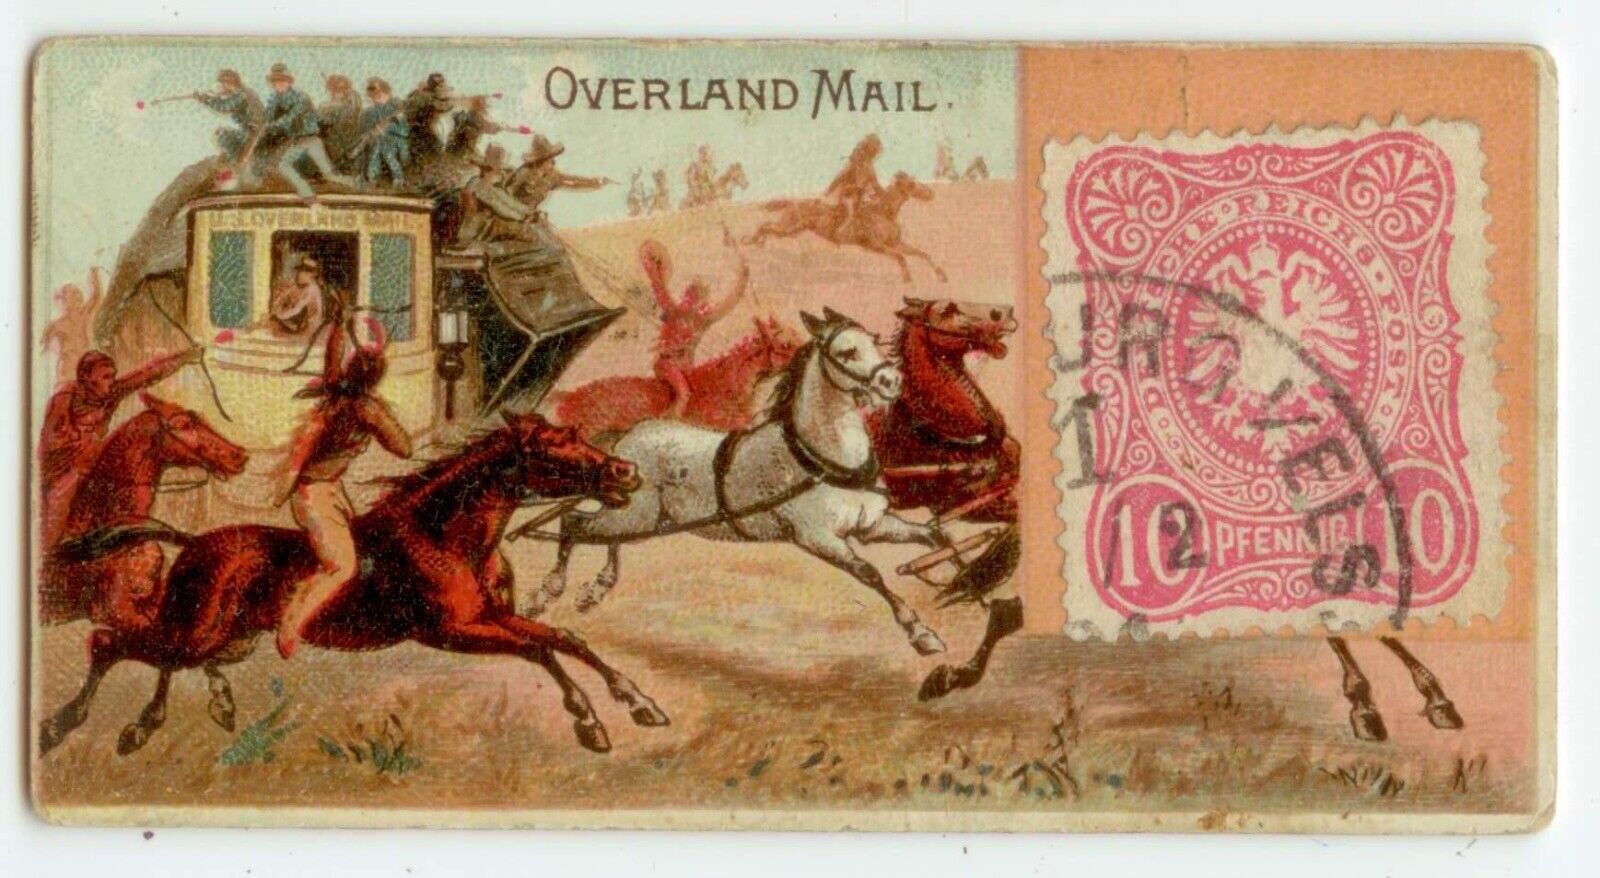 c1889 Duke's Postage Stamp card - Overland Mail - Germany stamp